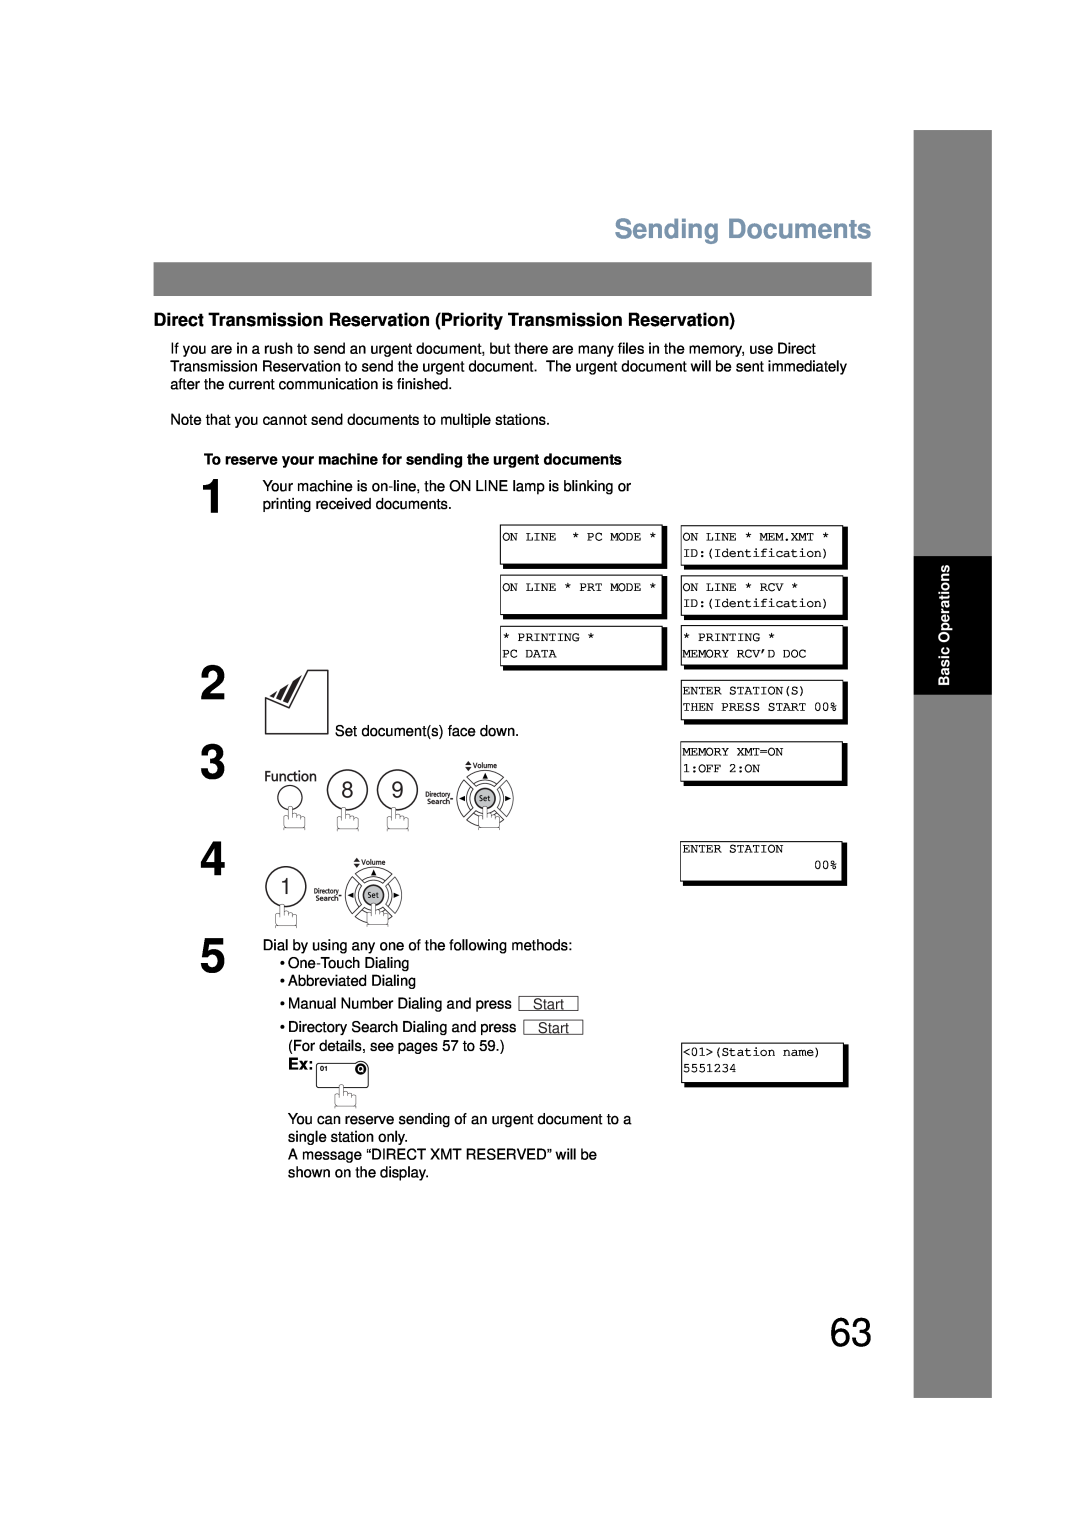 Panasonic UF-6200 Sending Documents, Direct Transmission Reservation Priority Transmission Reservation, Basic Operations 